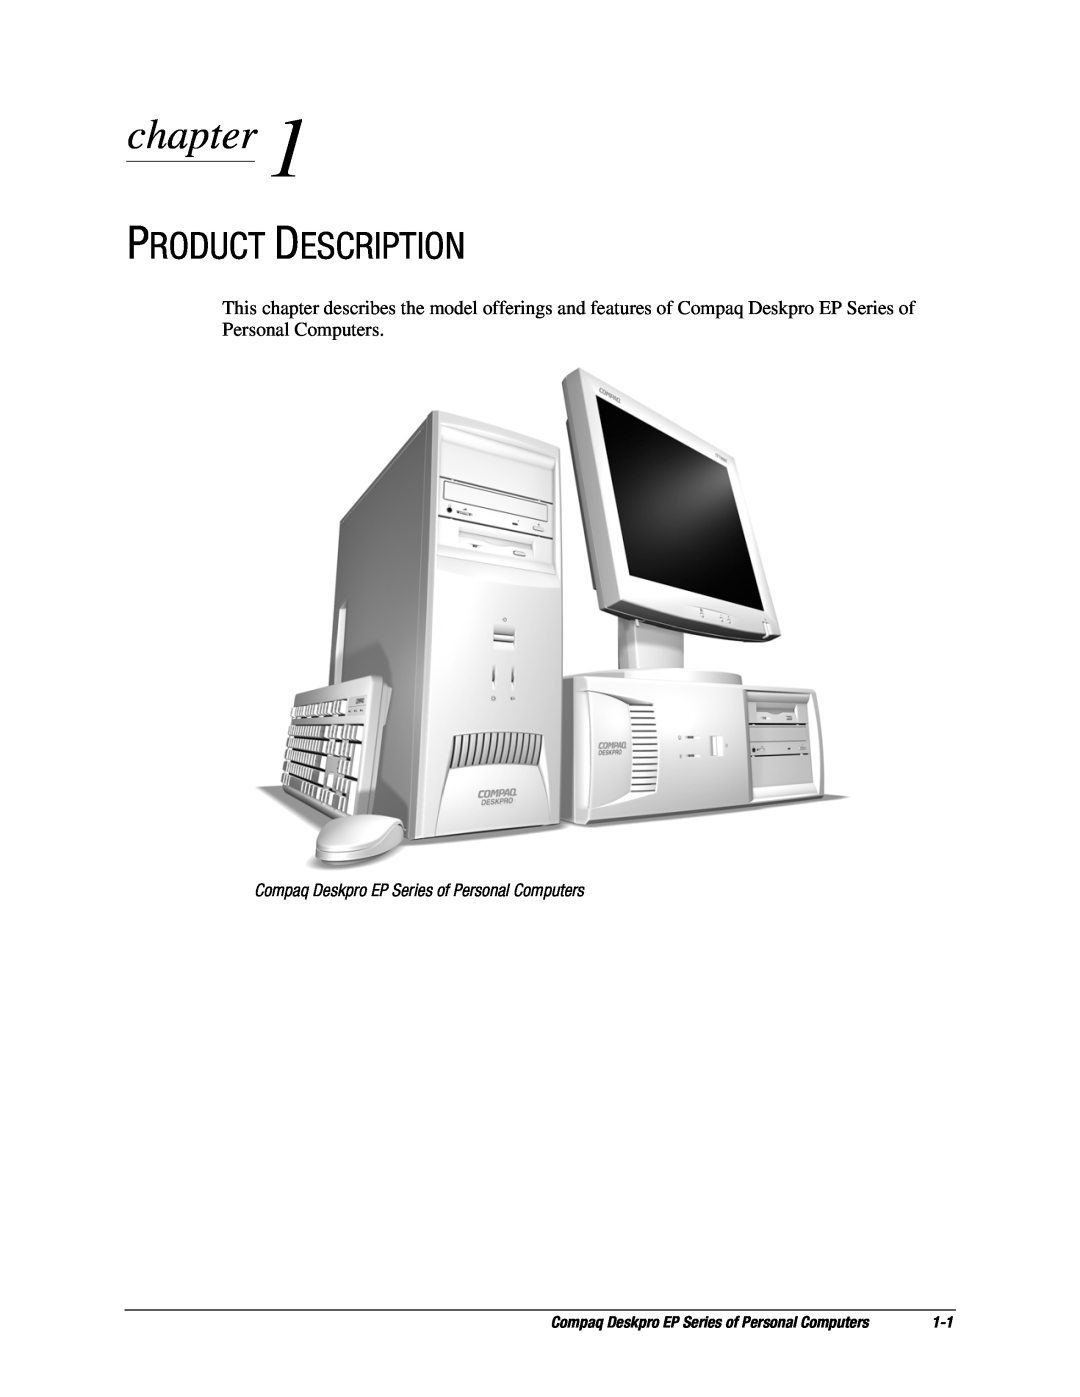 Compaq manual chapter, Product Description, Compaq Deskpro EP Series of Personal Computers 